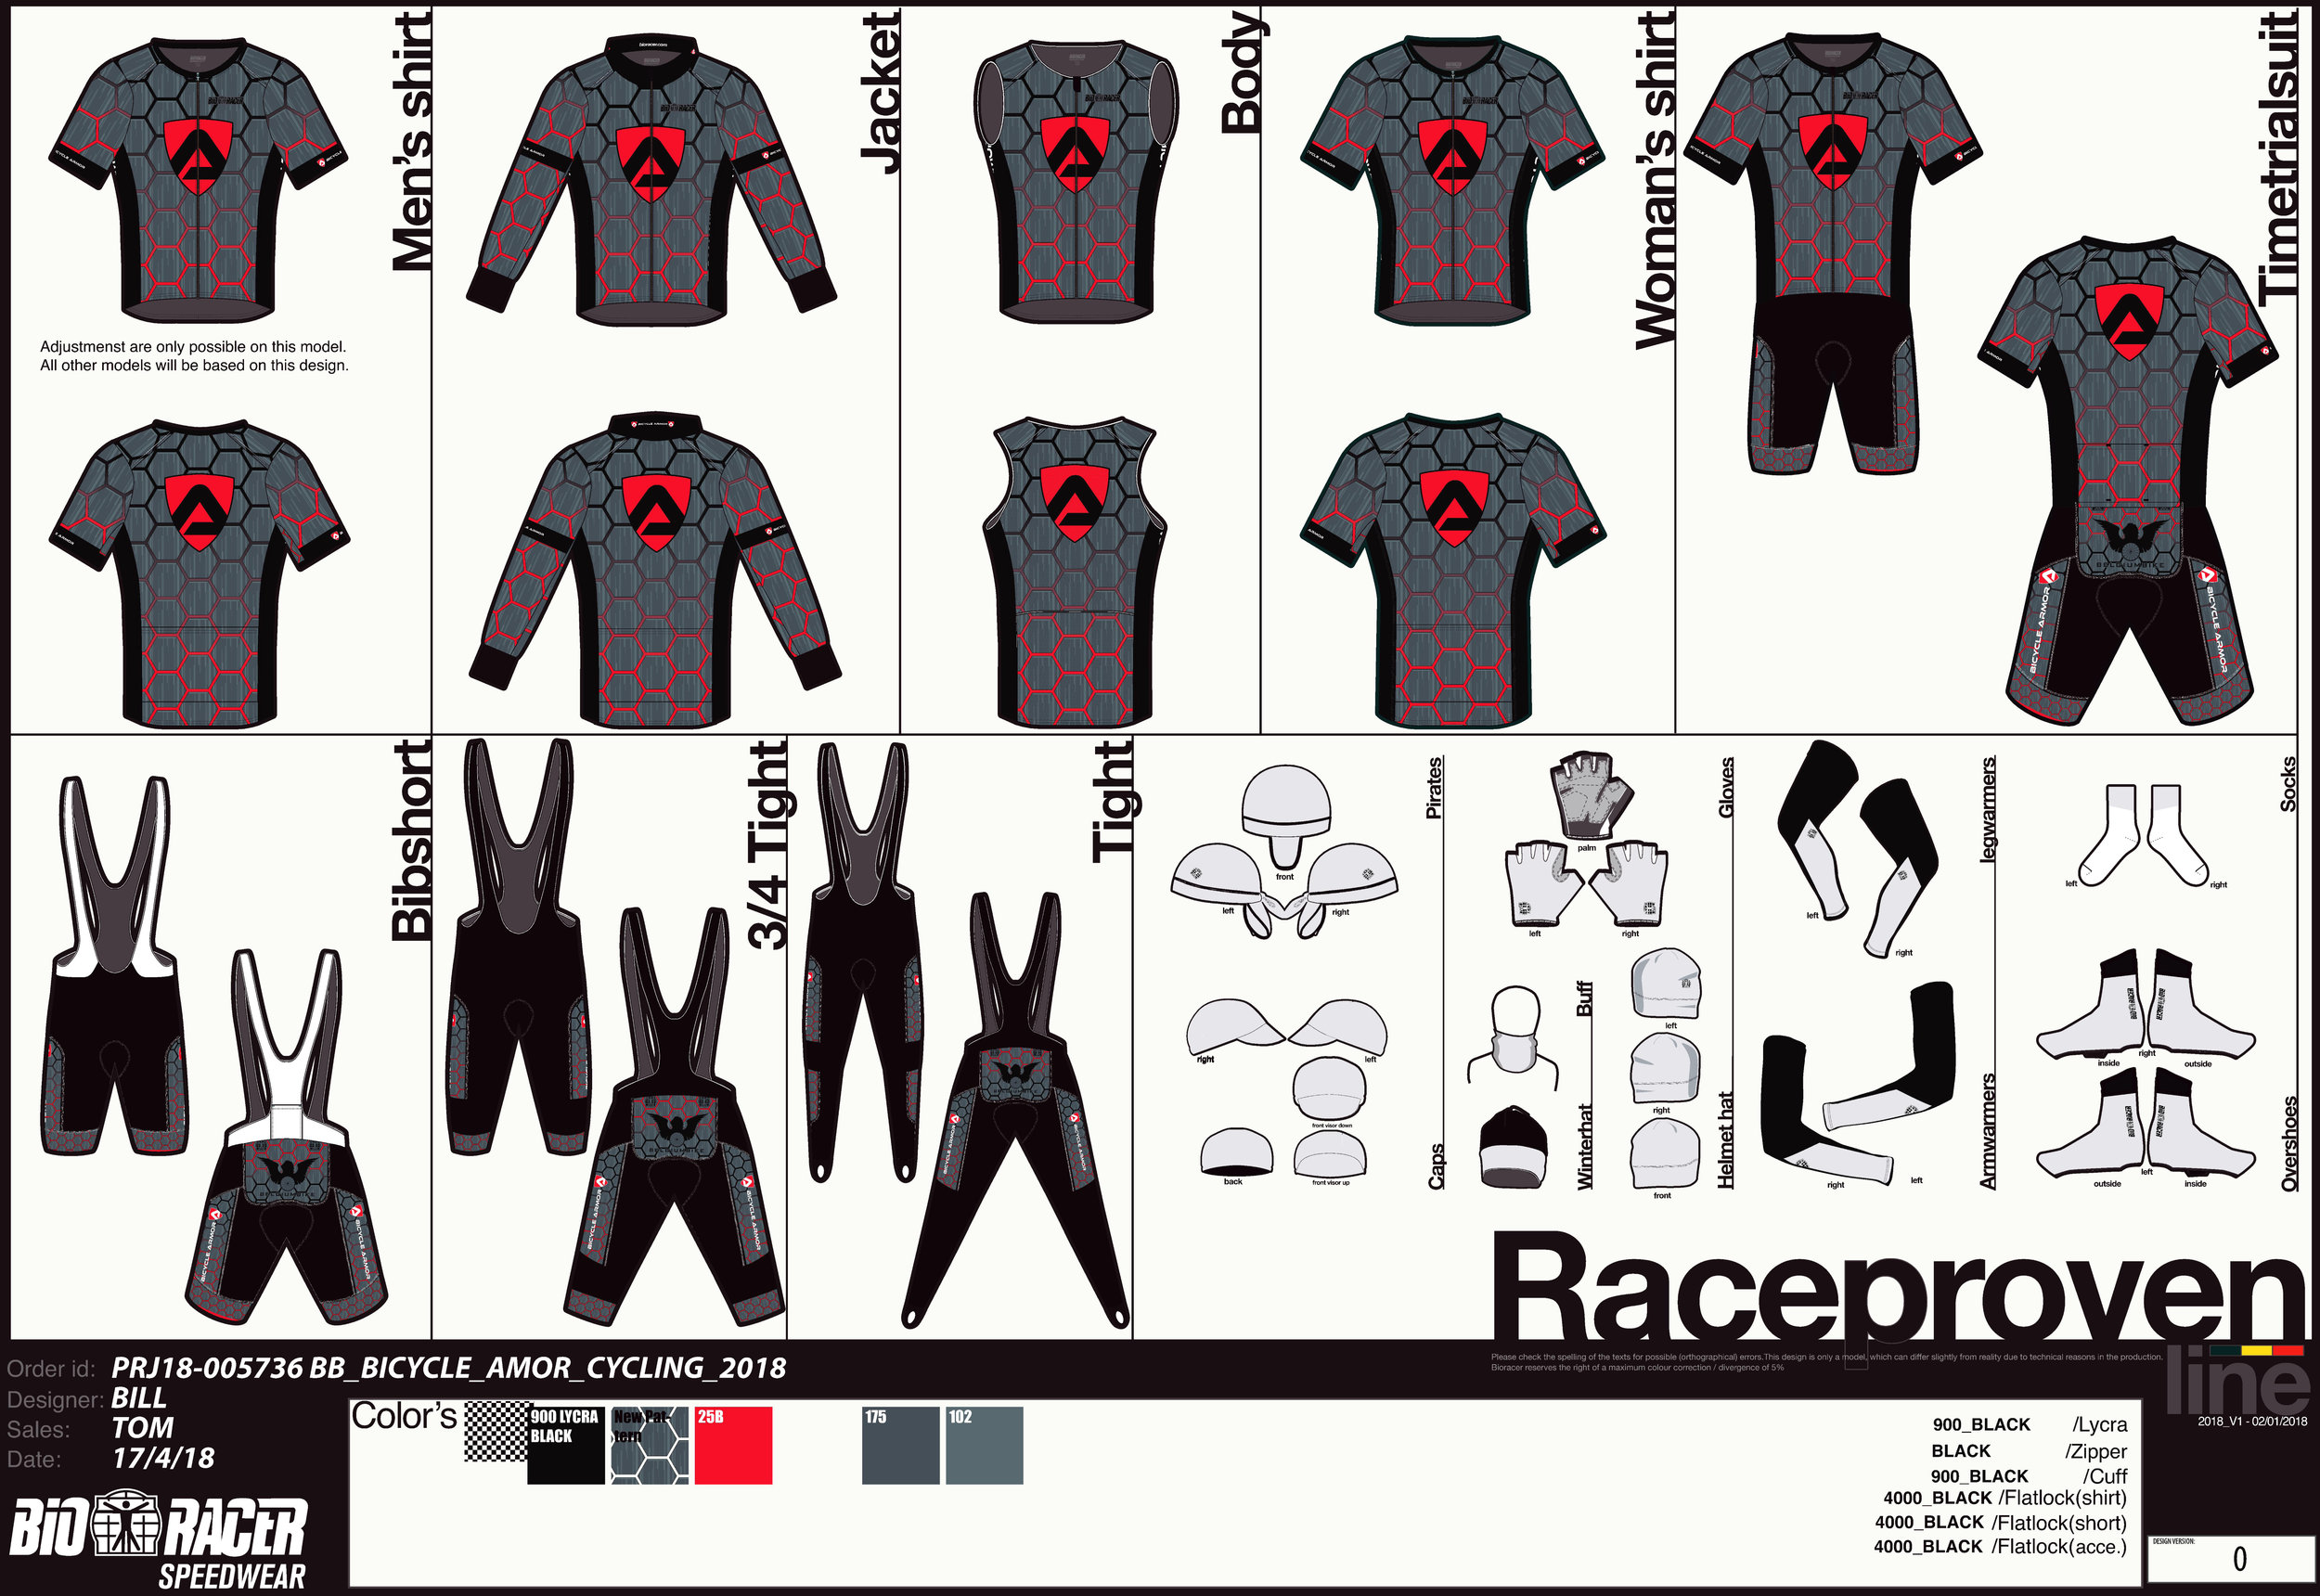 Bioracer raceproven body vest back.jpg